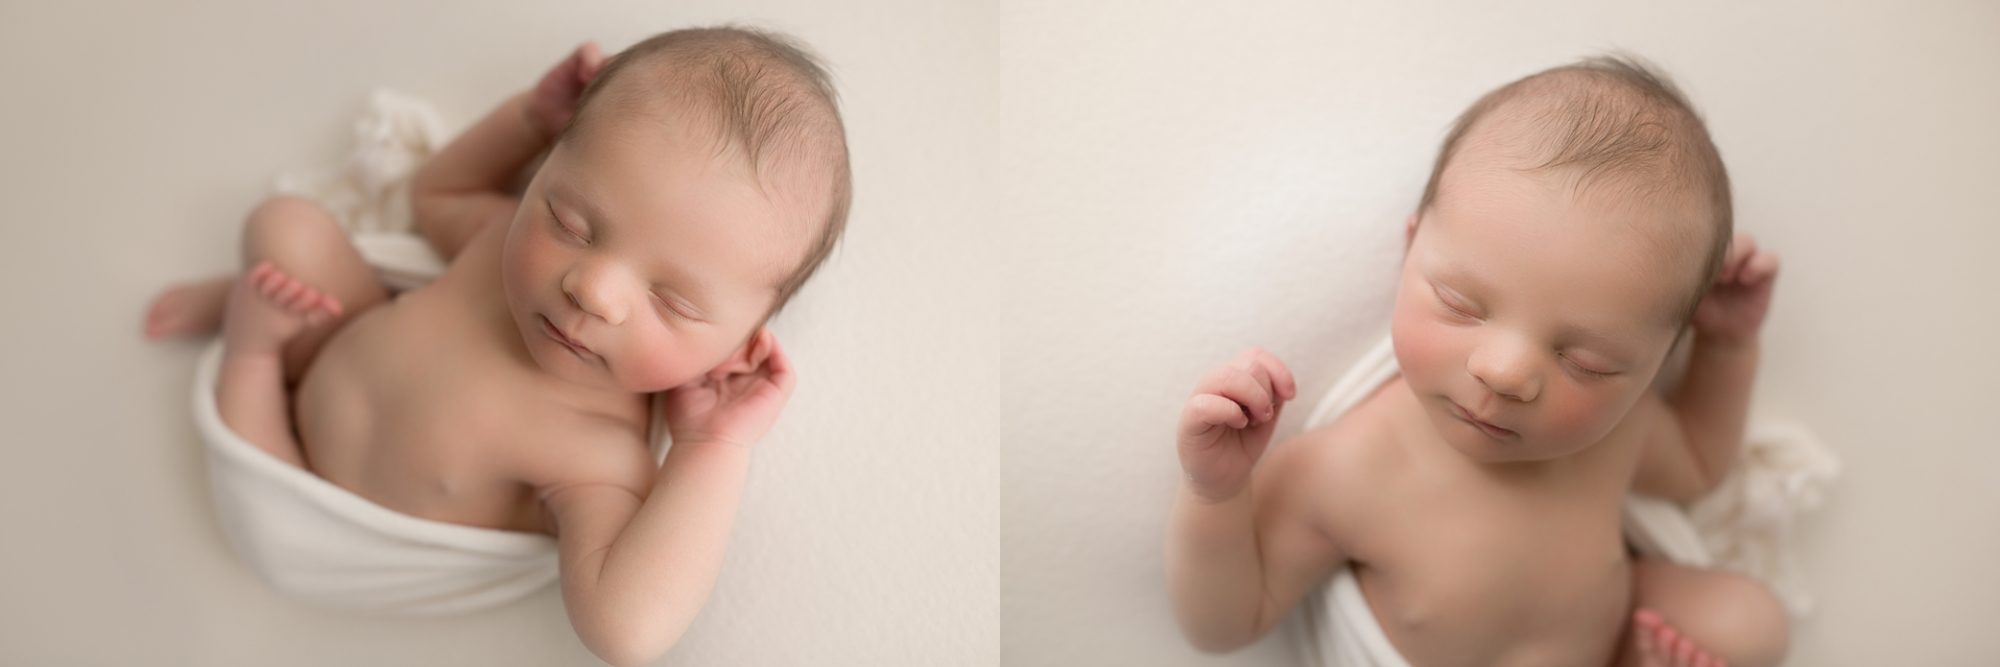 tacoma baby photographer | Newborn photography Seattle